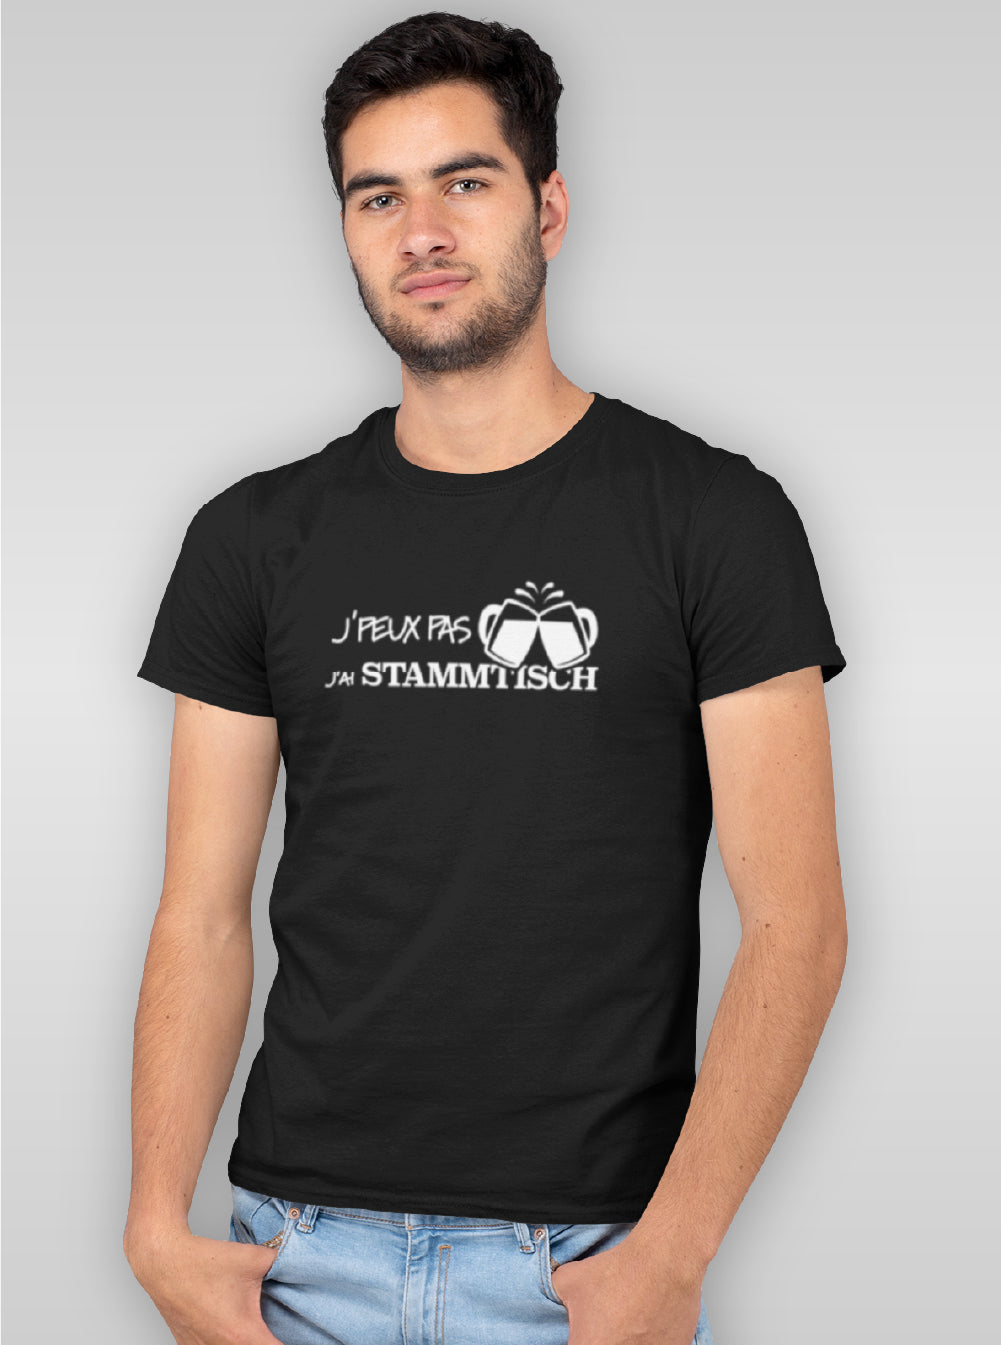 T-Shirt "J'PEUX PAS J'AI STAMMTISCH"